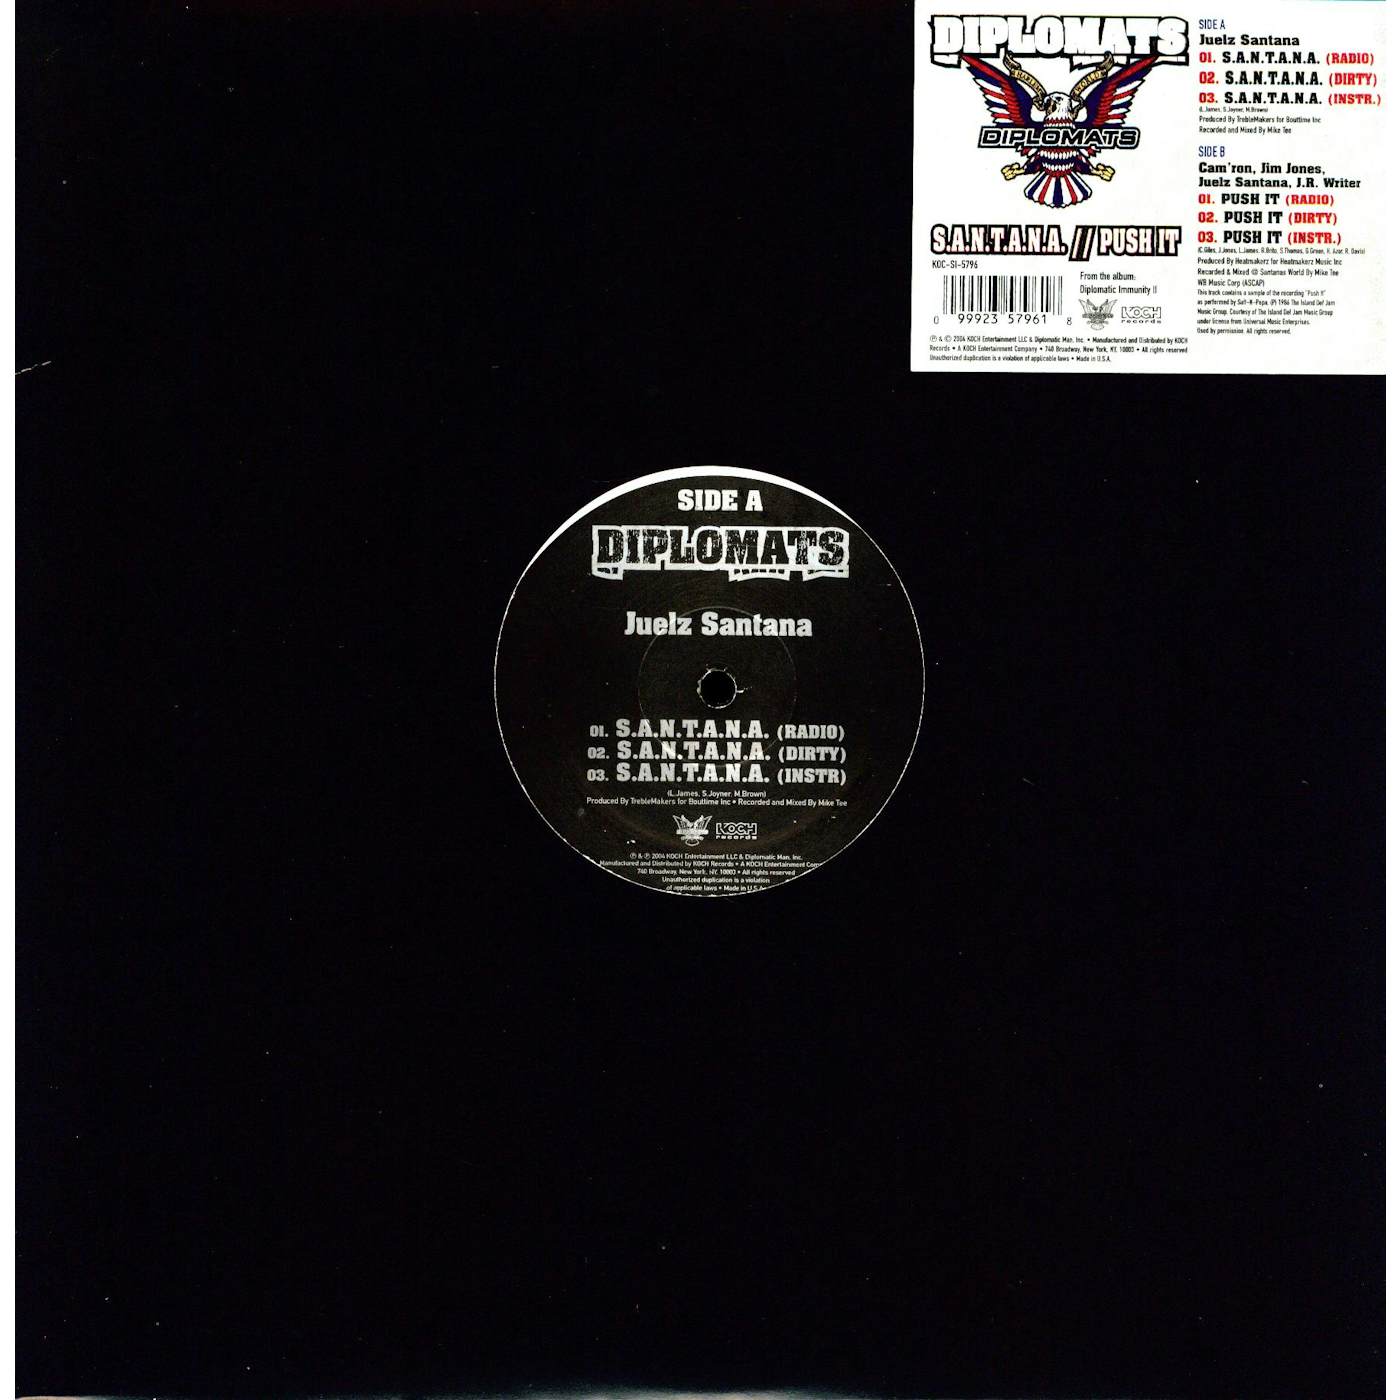 Diplomats S.A.N.T.A.N.A: PUSH IT Vinyl Record